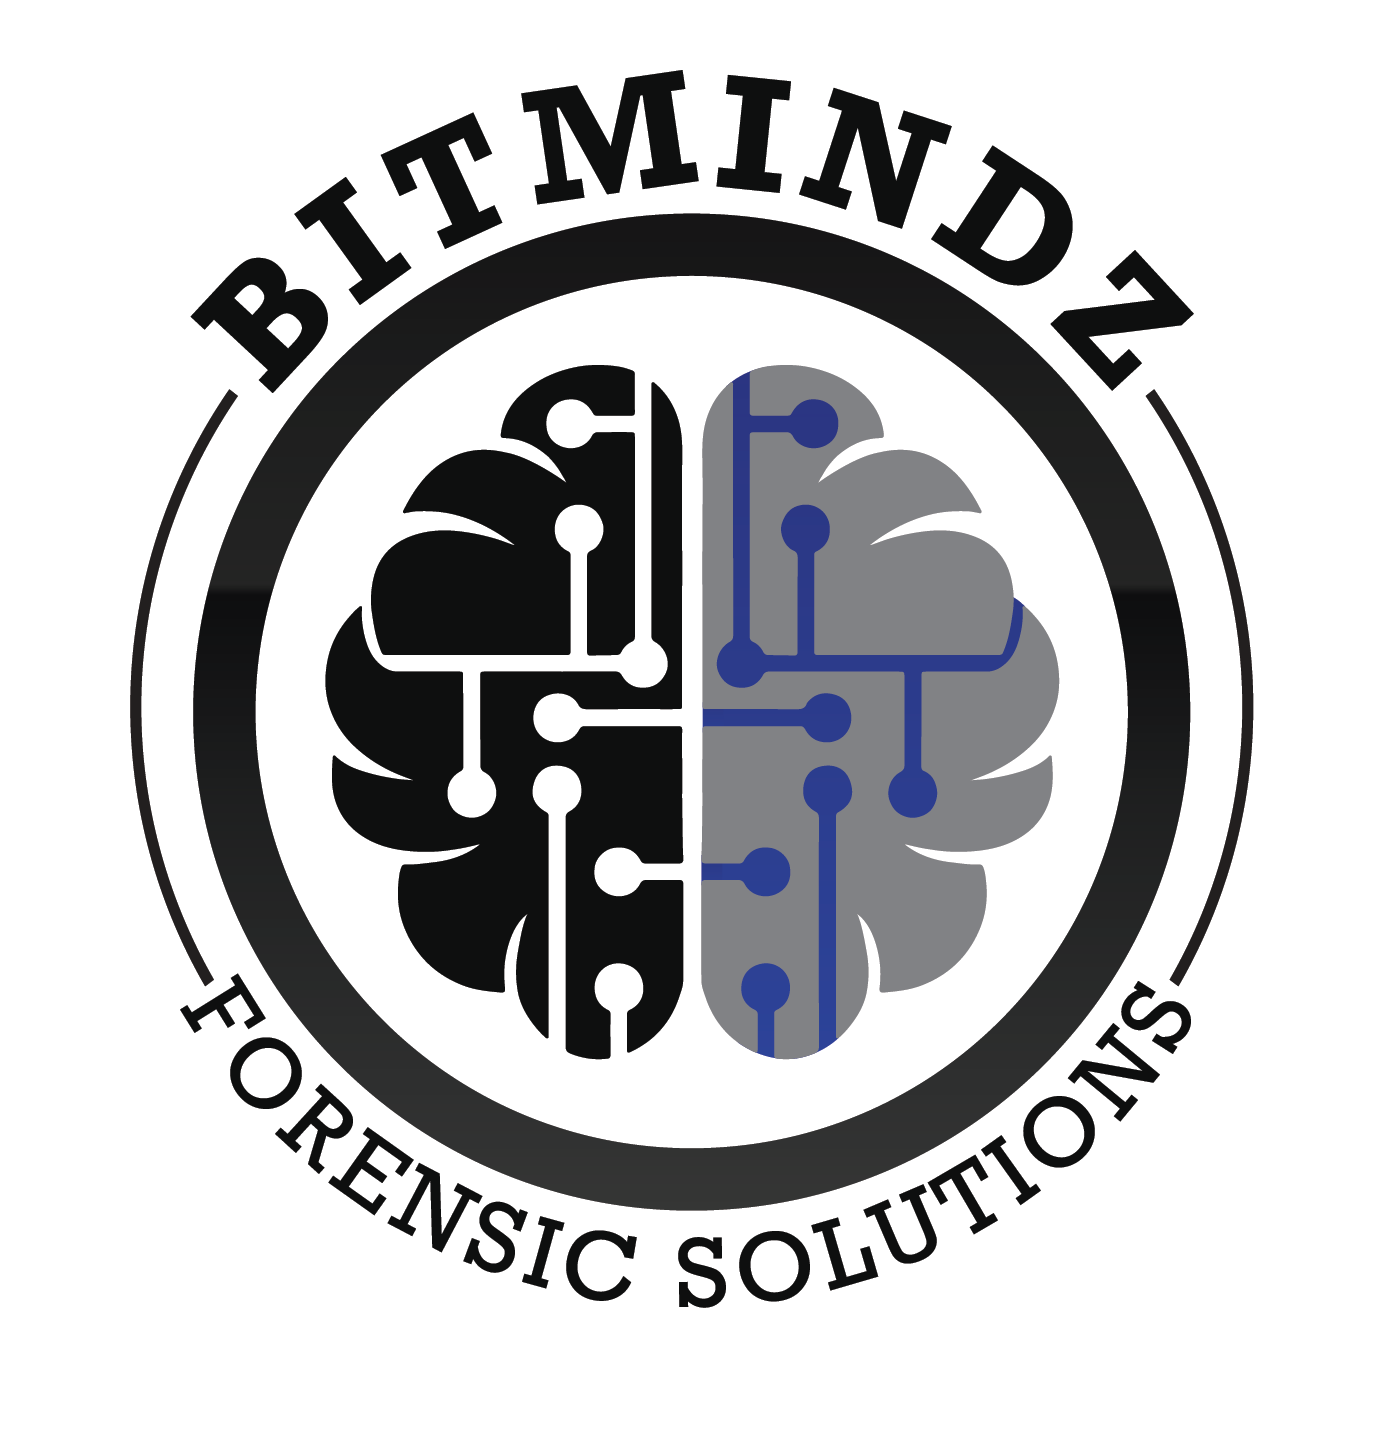 Bitmindz Forensic solutions logo